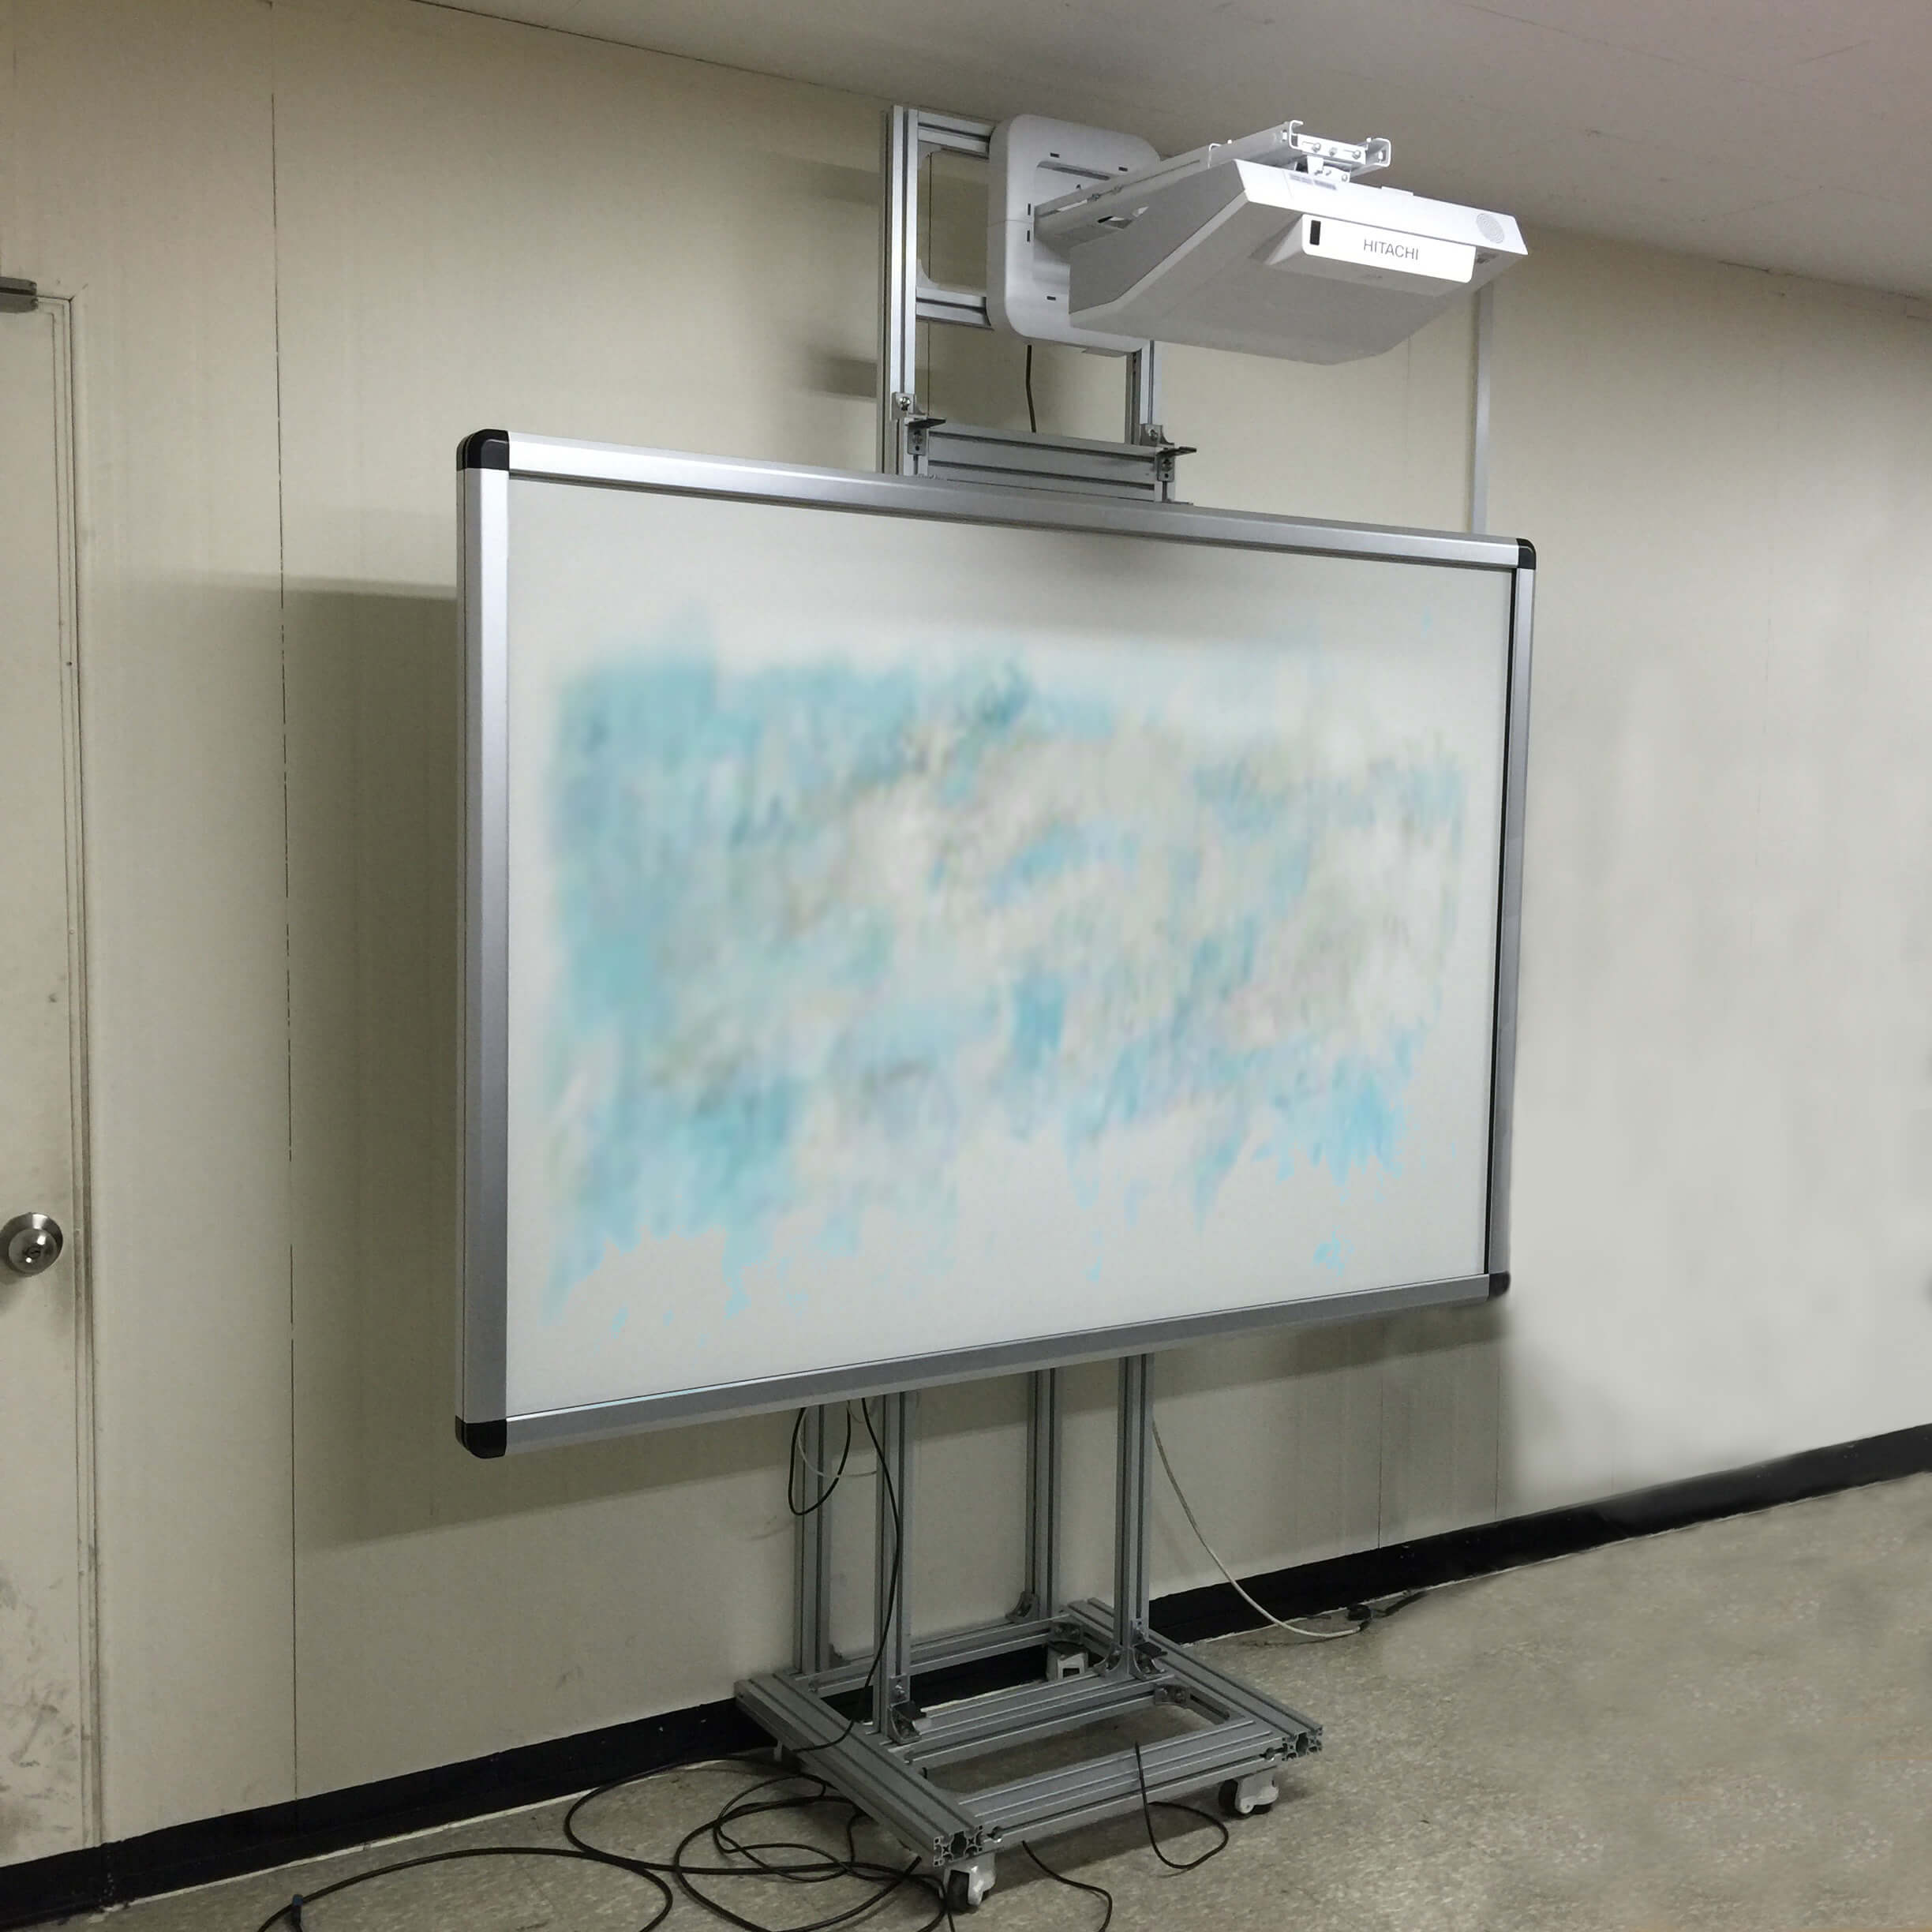 Teachers used the smart board as a white board.